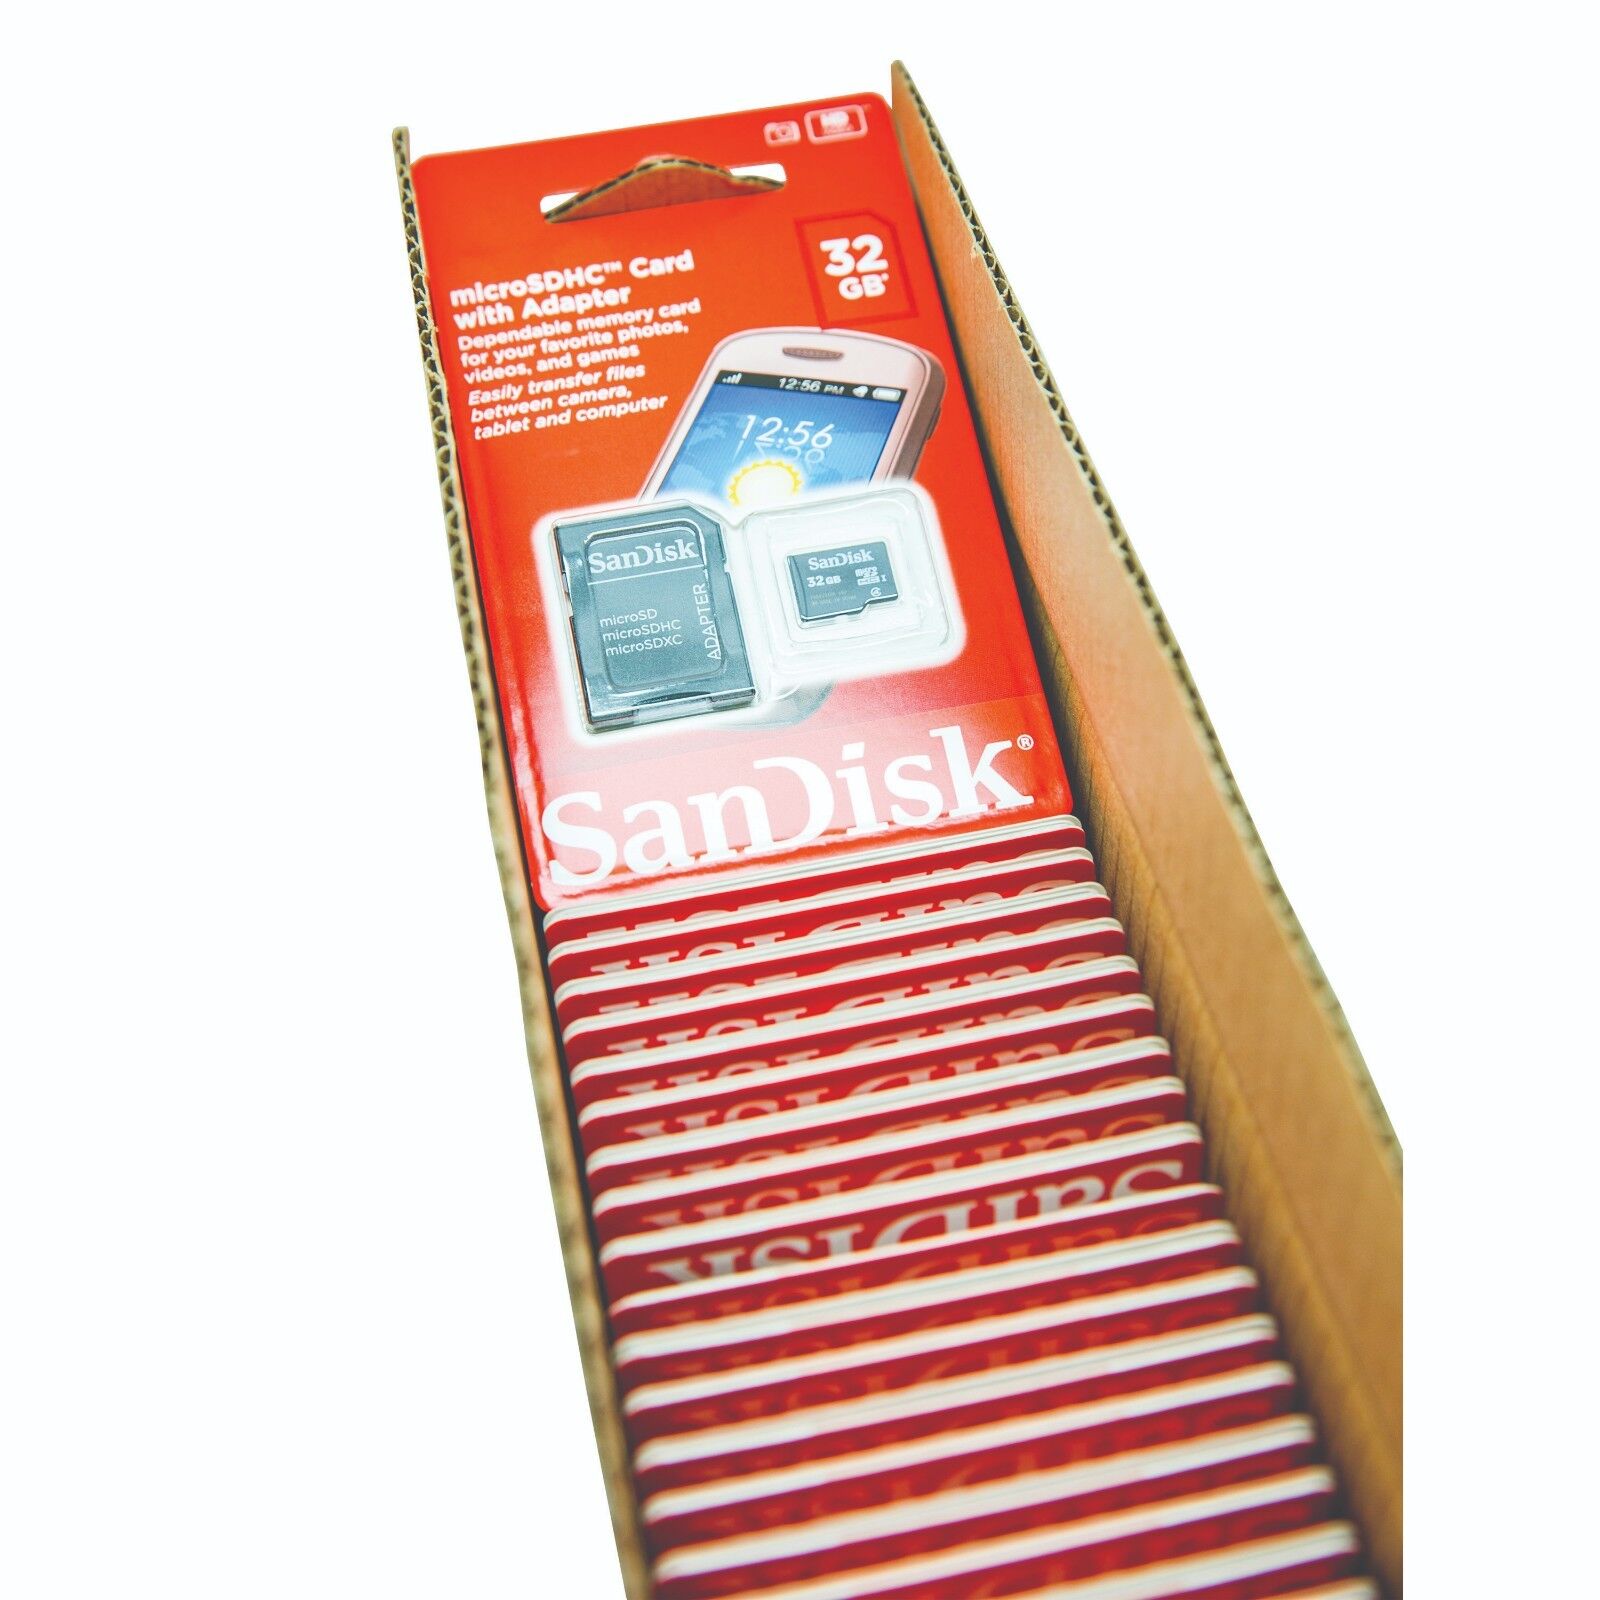 SanDisk 32GB MicroSD Card  SDHC SD 32 GB TF Memory Card Wholesale Lot 50 Pack SanDisk SDSDQM-032G